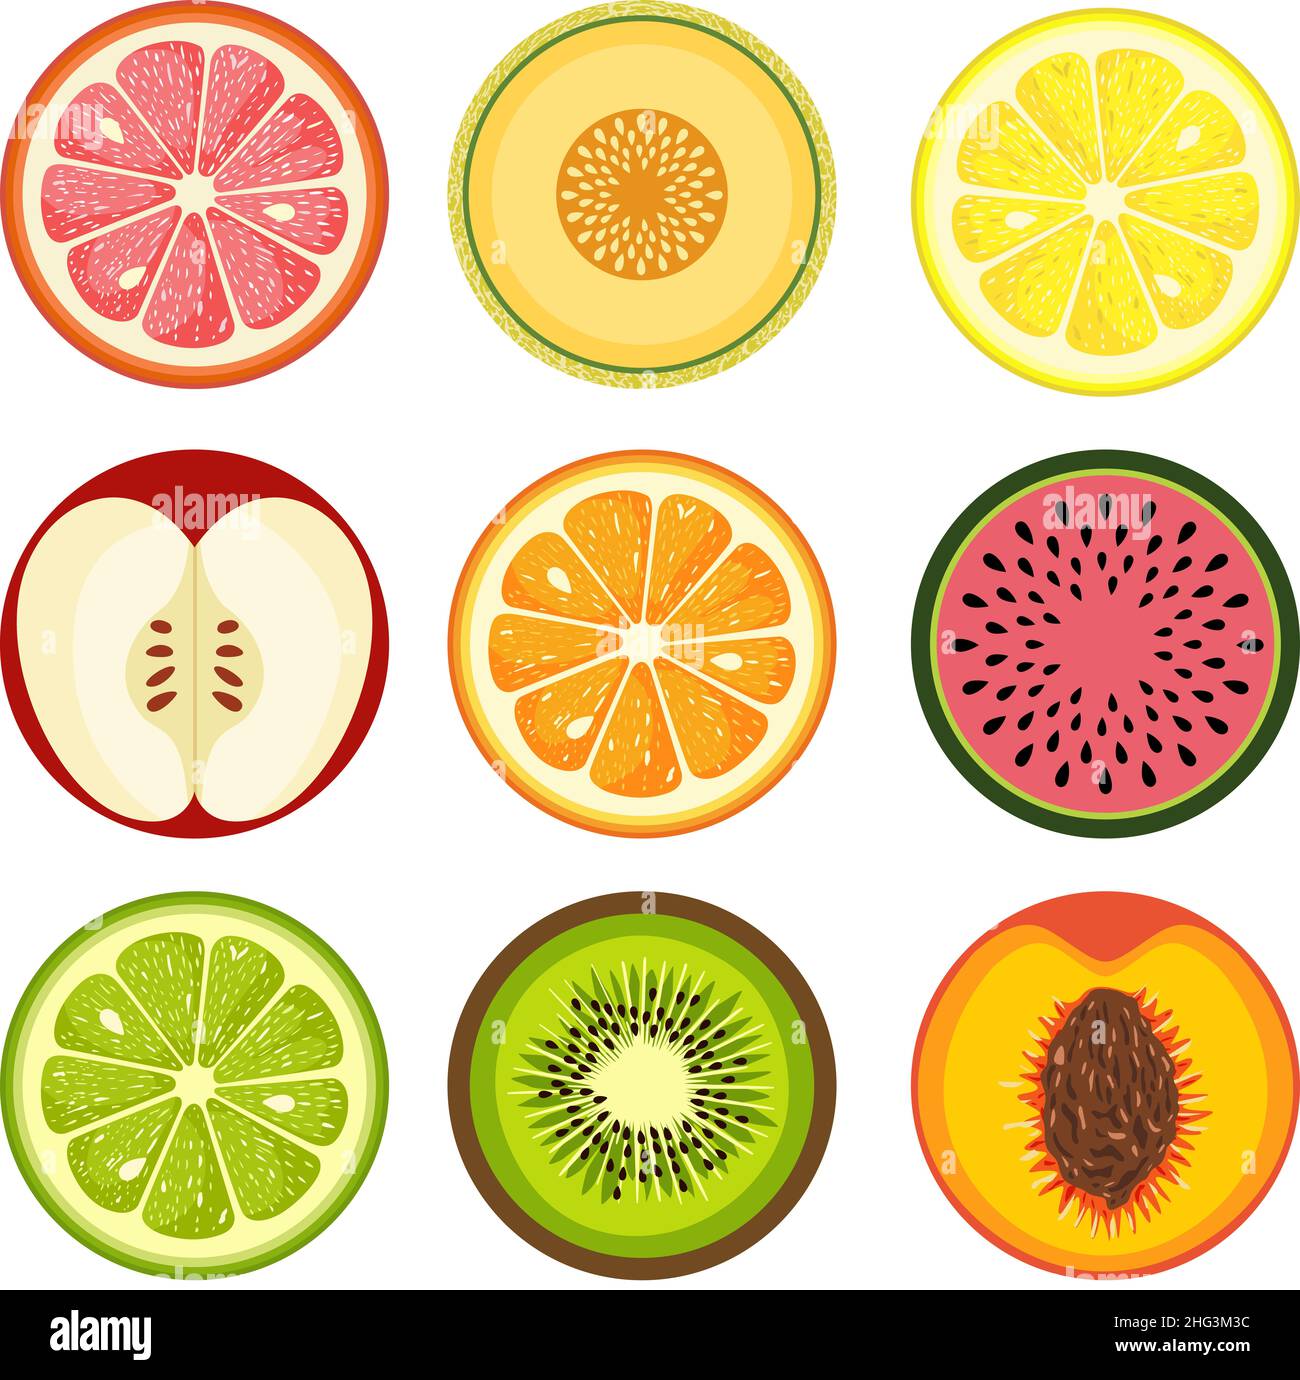 https://c8.alamy.com/comp/2HG3M3C/set-of-round-summer-fruit-slices-2HG3M3C.jpg